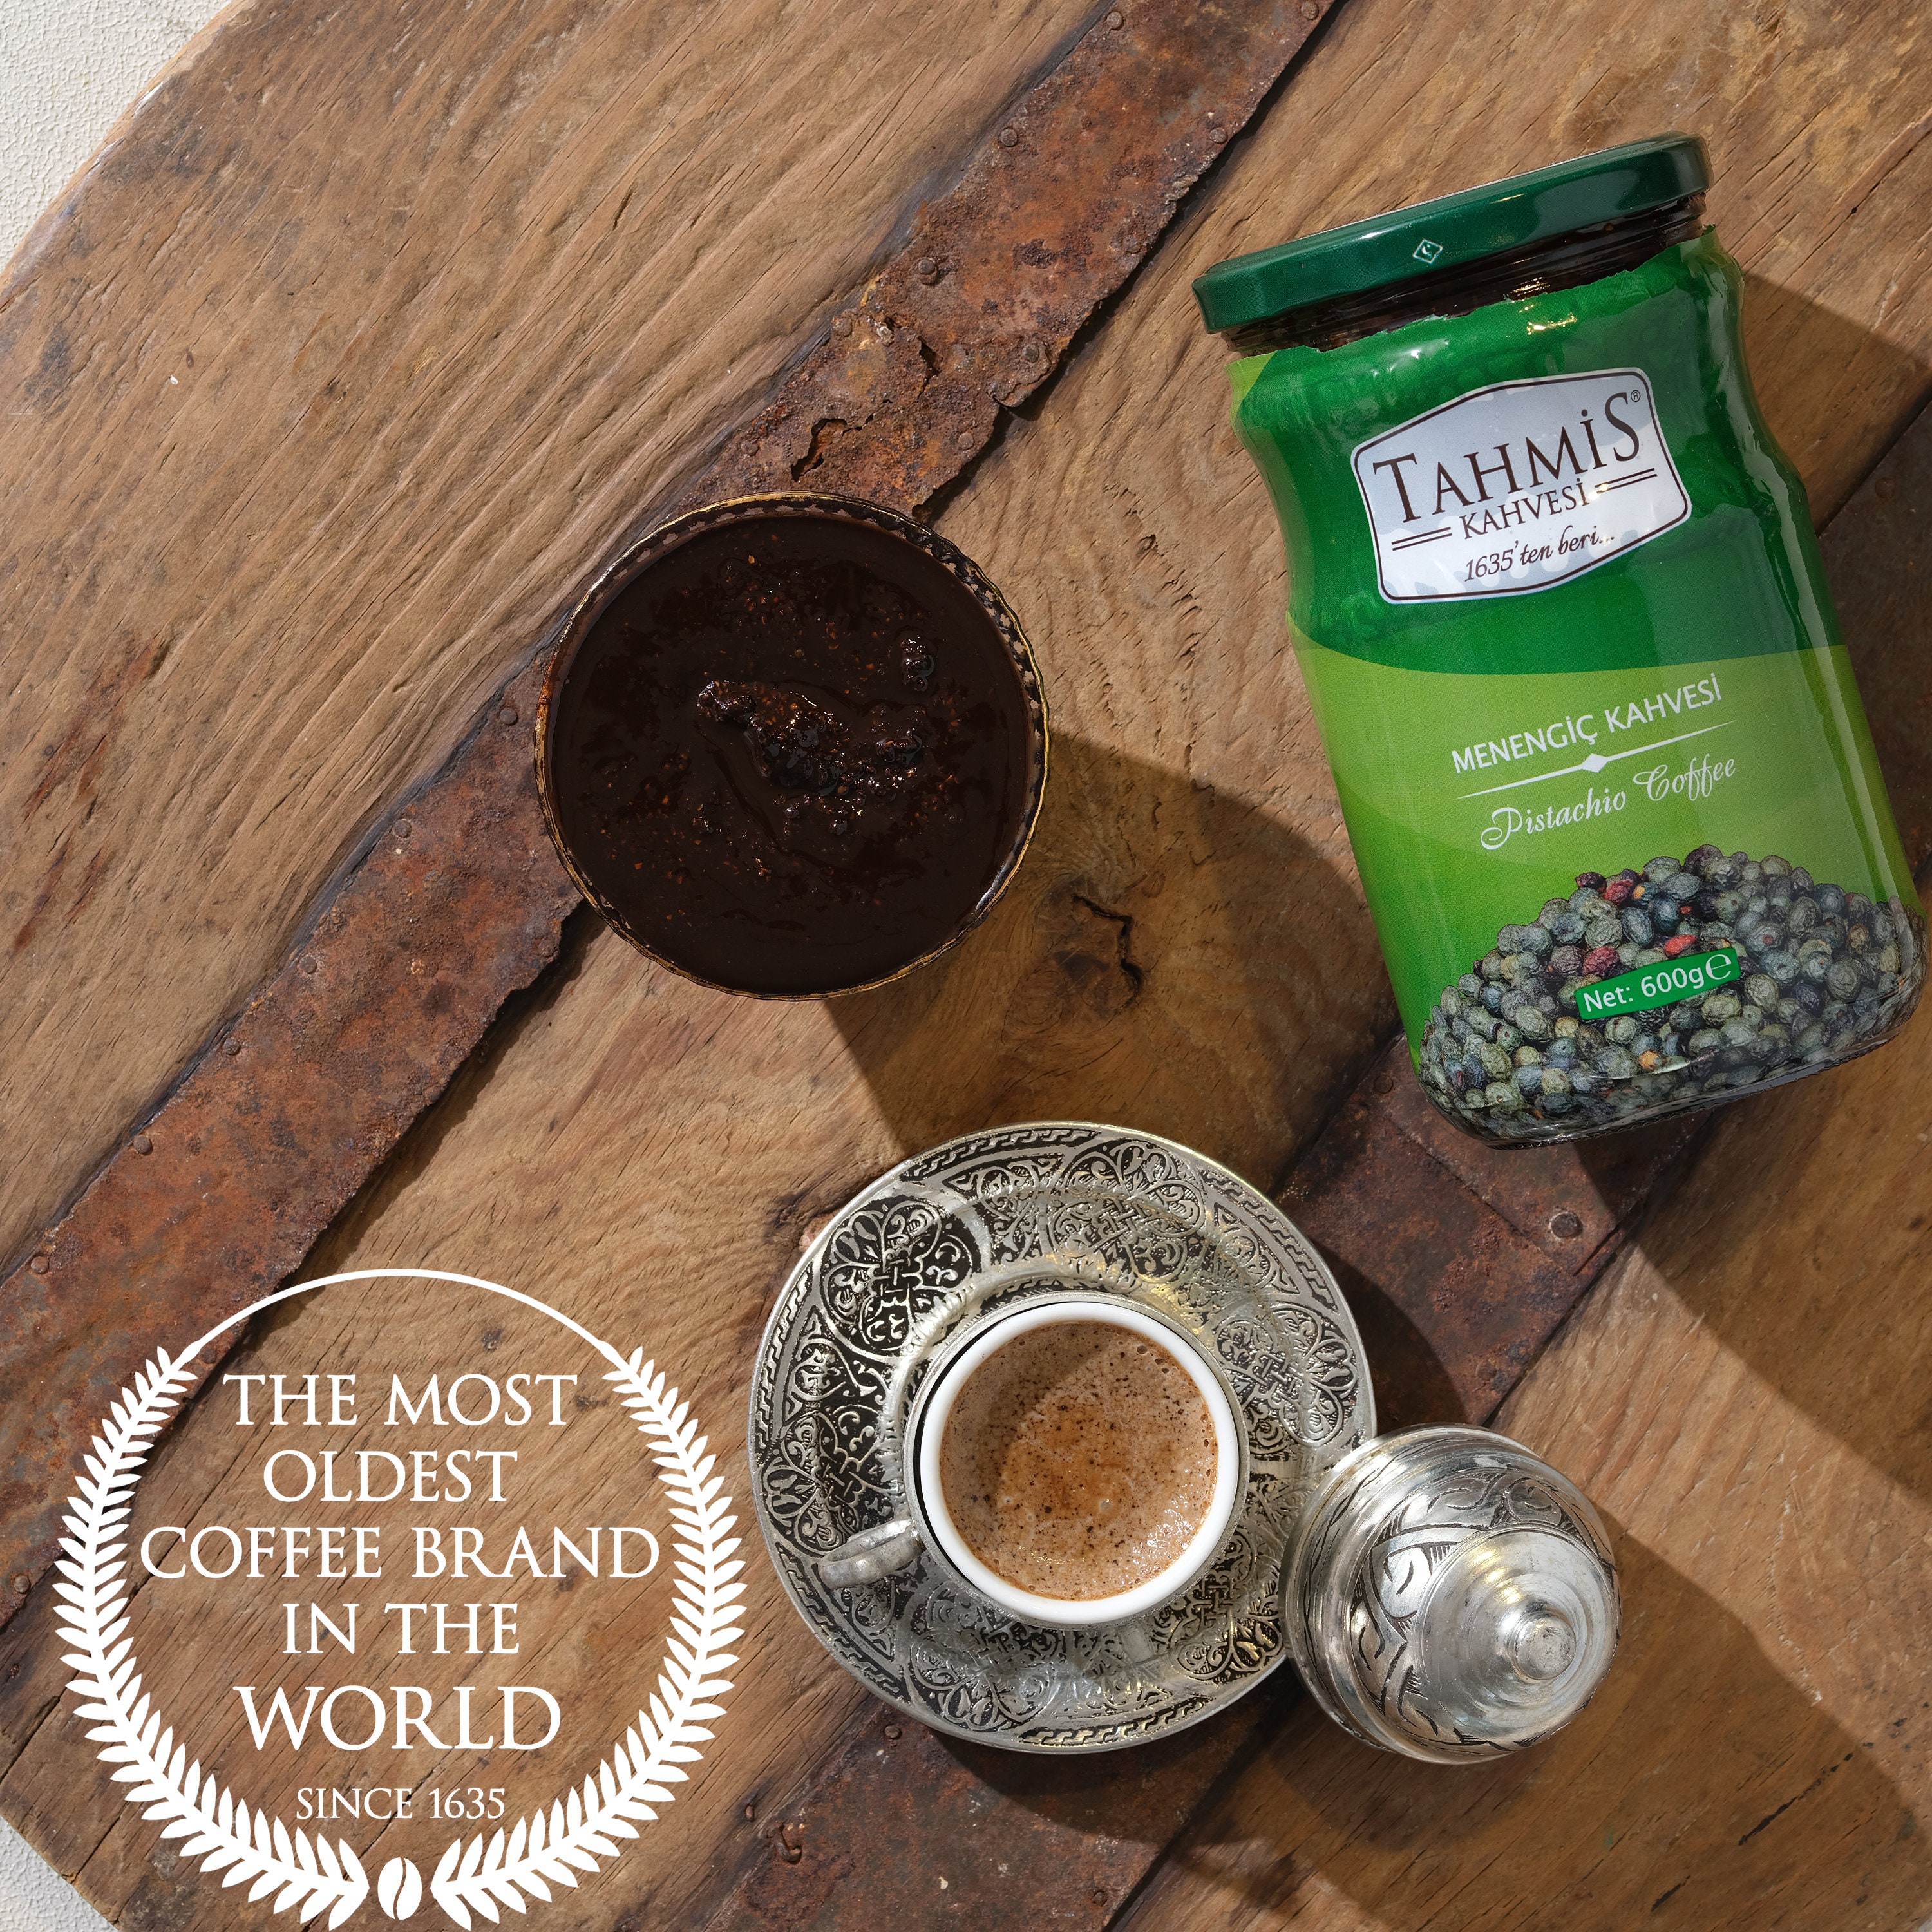 How To Make Turkish Coffee - Turk Kahvesi - Give Recipe